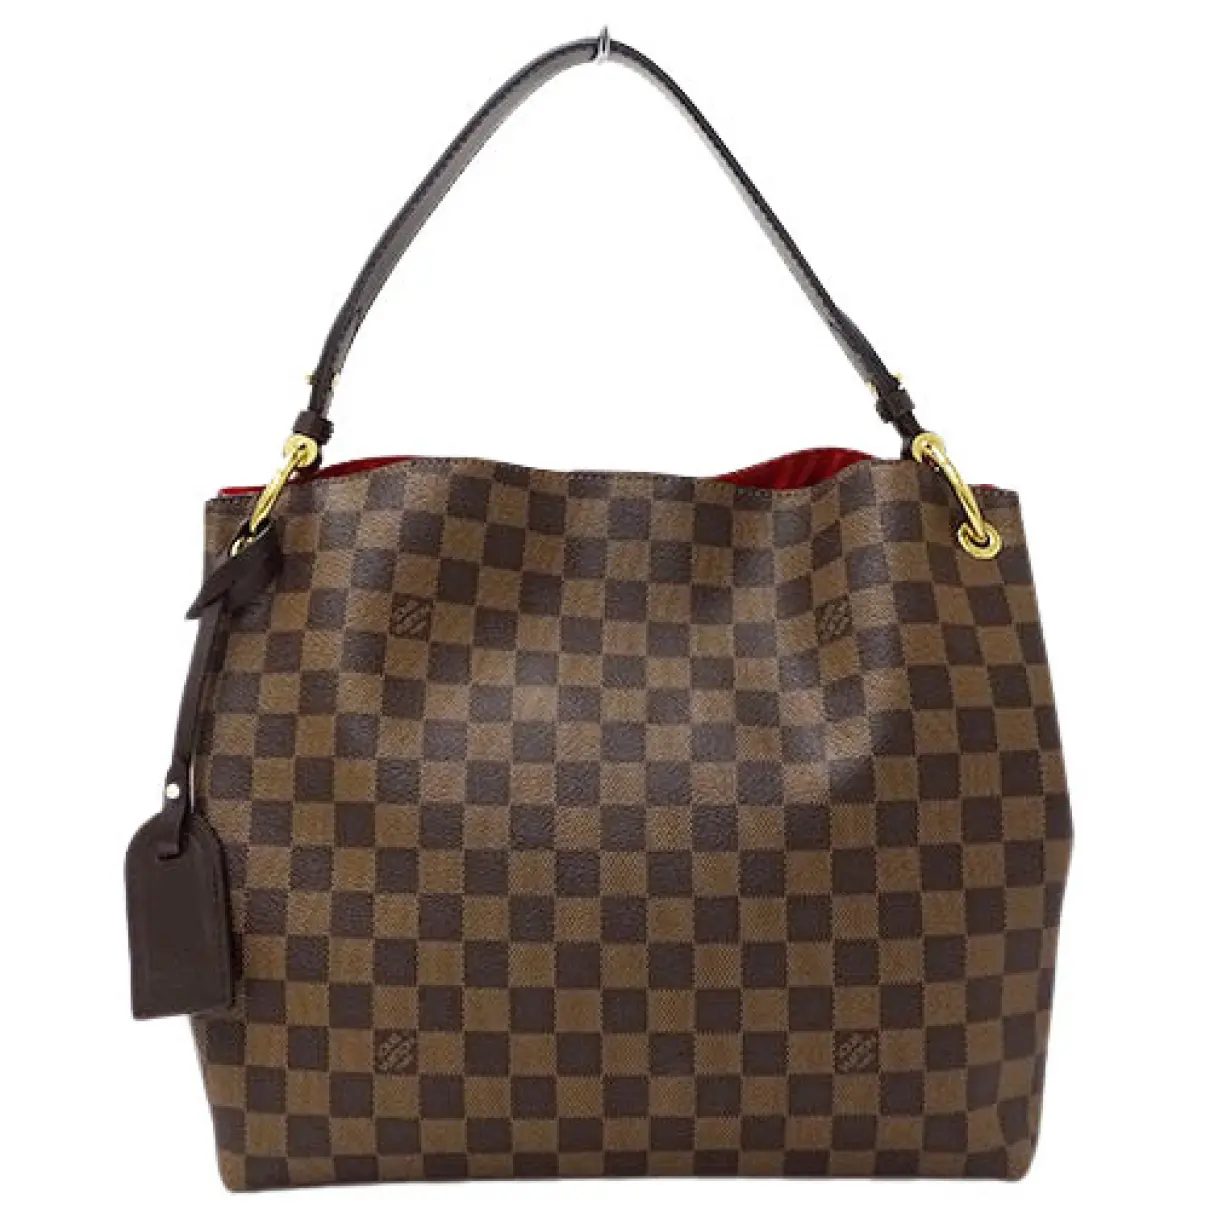 Buy Louis Vuitton Graceful leather handbag online